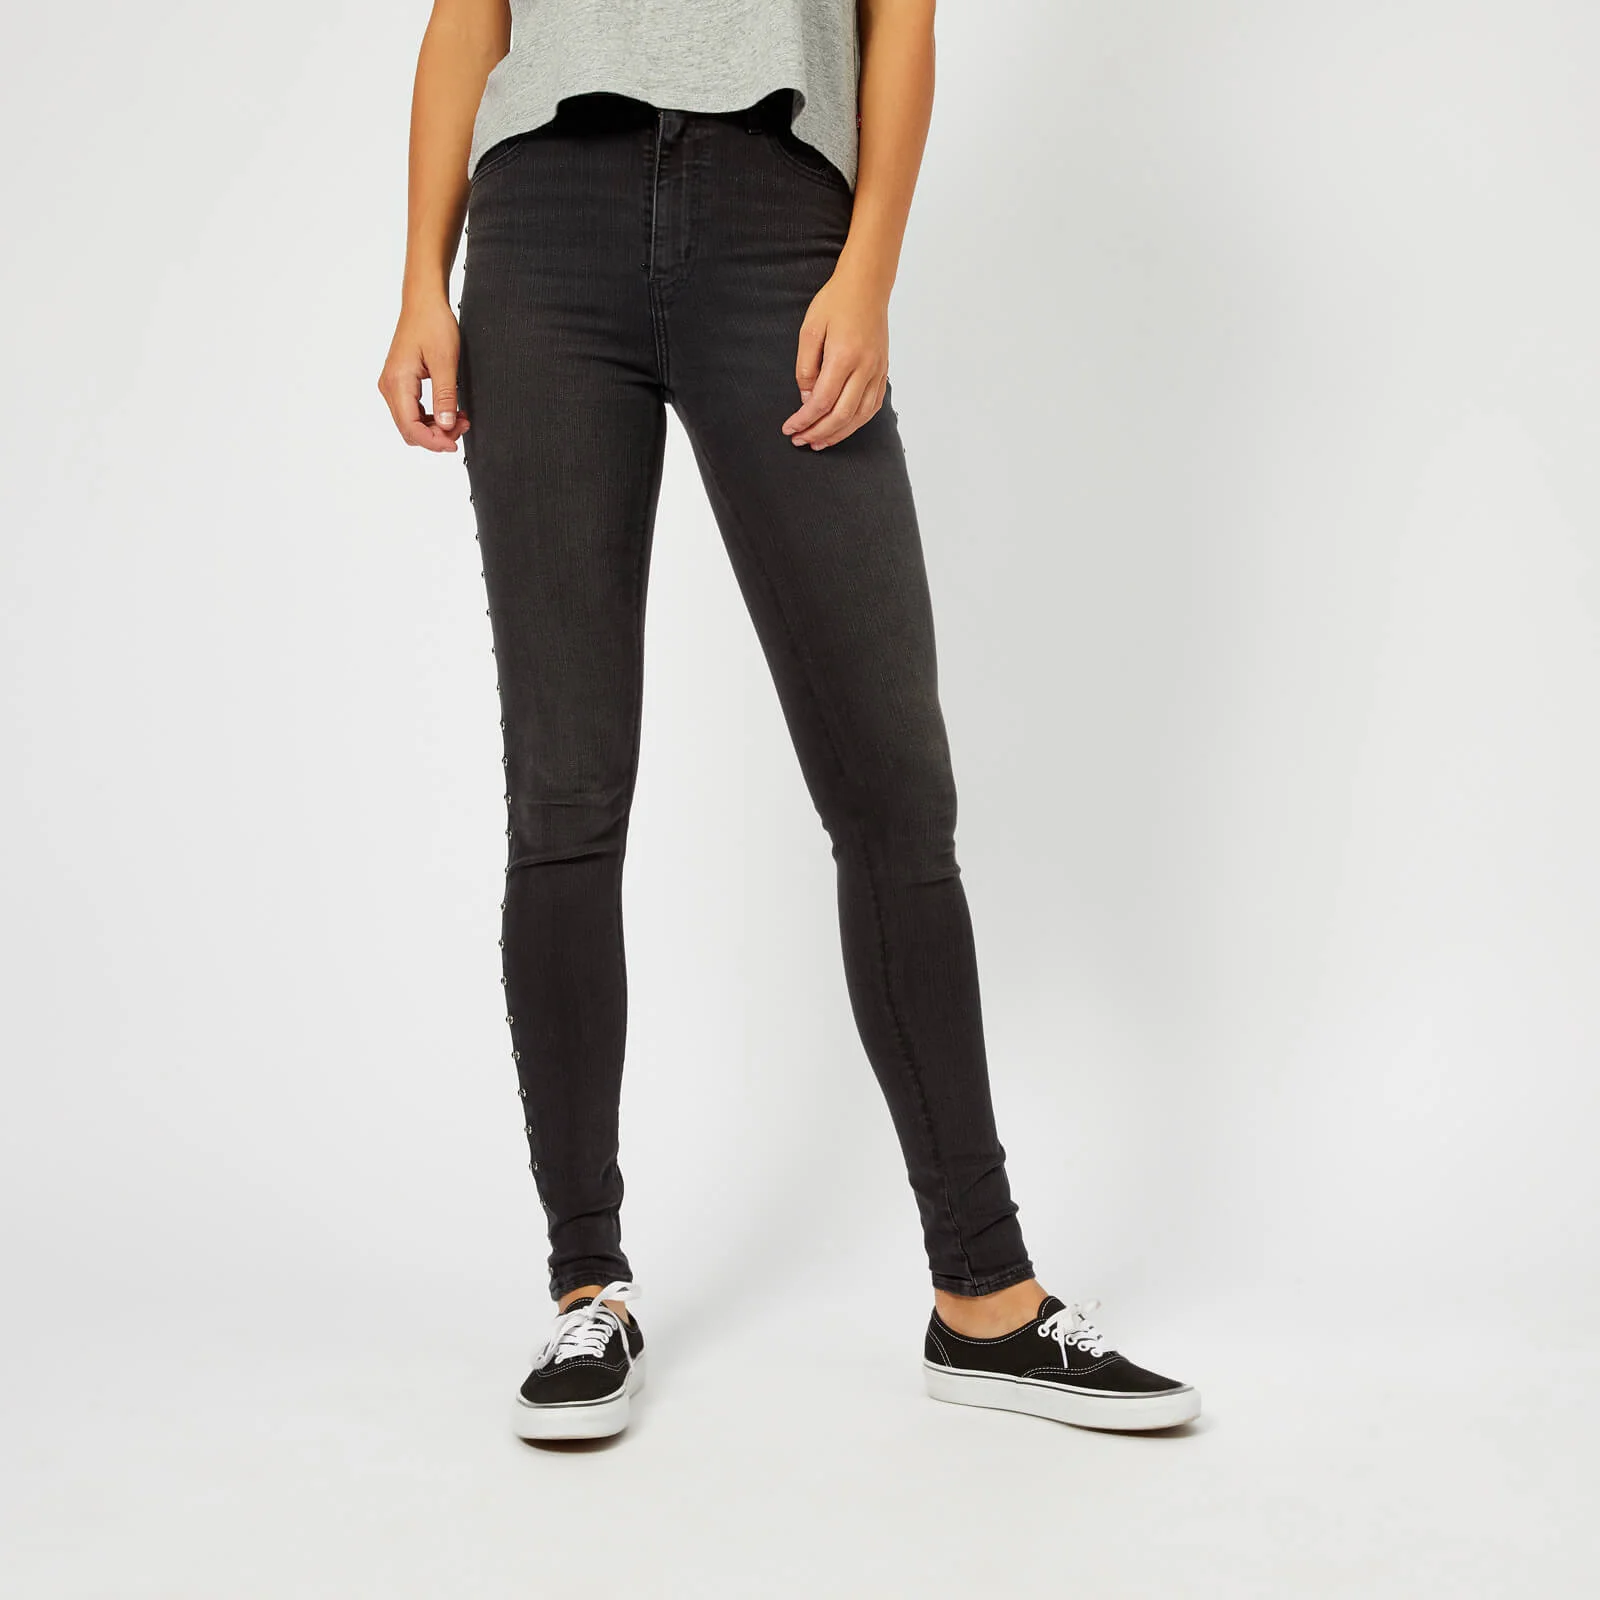 Levi's Women's Mile High Super Skinny Jeans - Last Hoorah Image 1